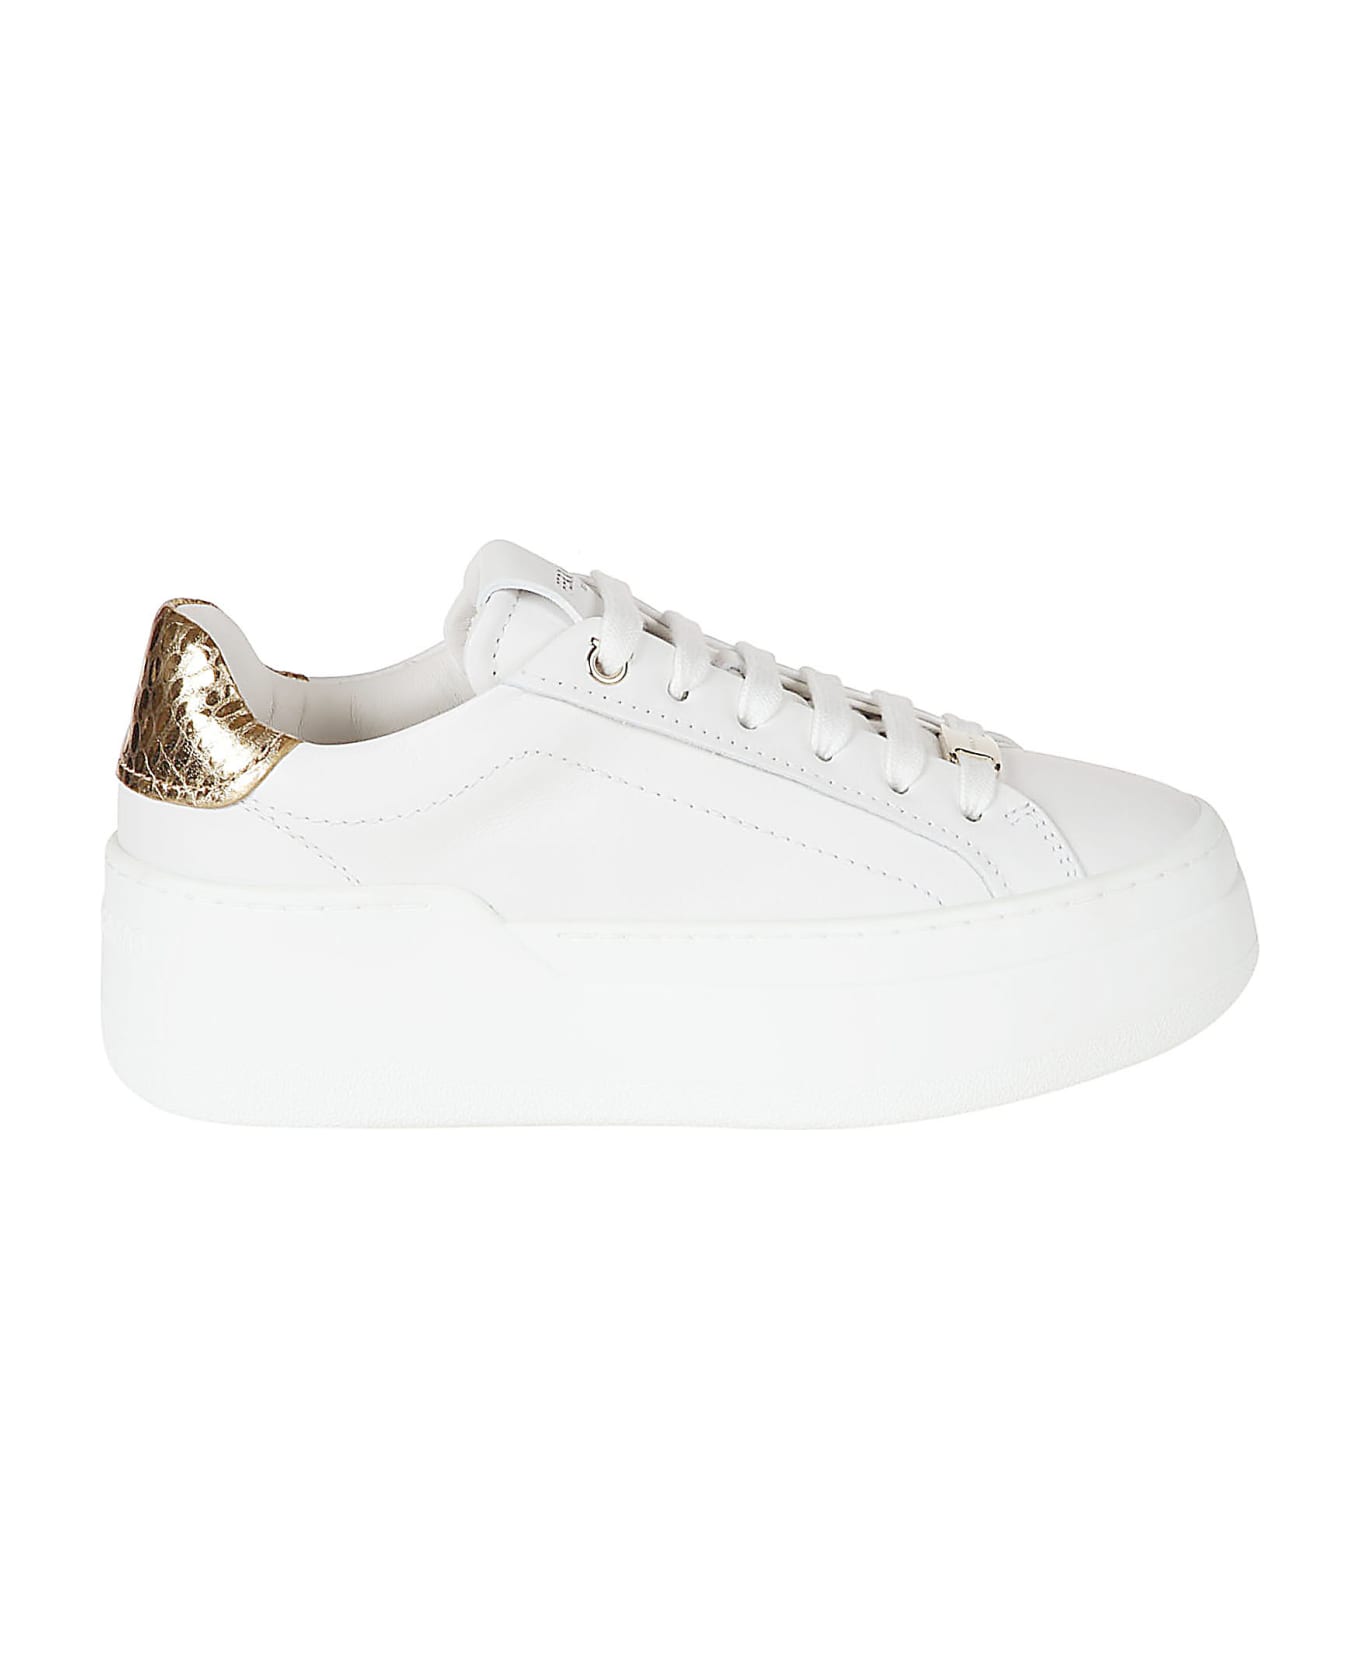 Ferragamo Dahlia 1 Sneakers - White/Gold